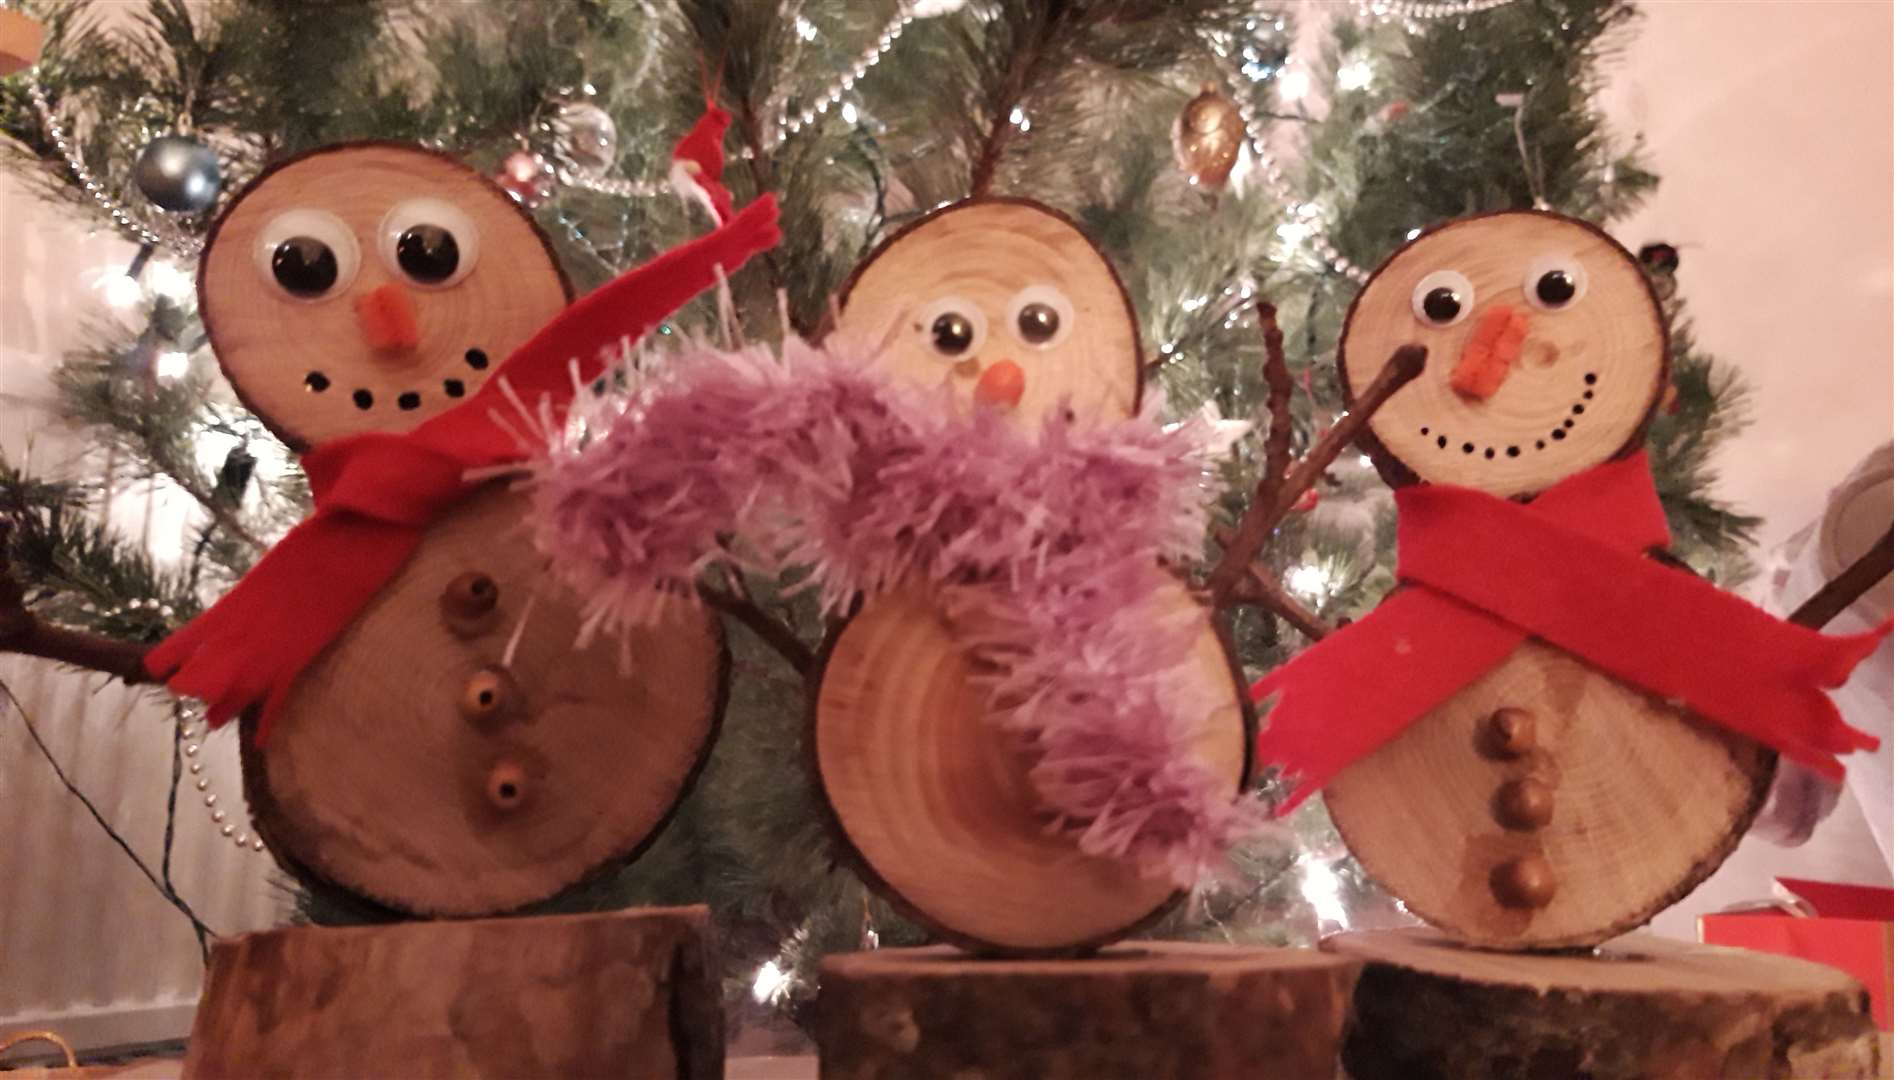 Some of the environmentally friendly wooden snowmen.